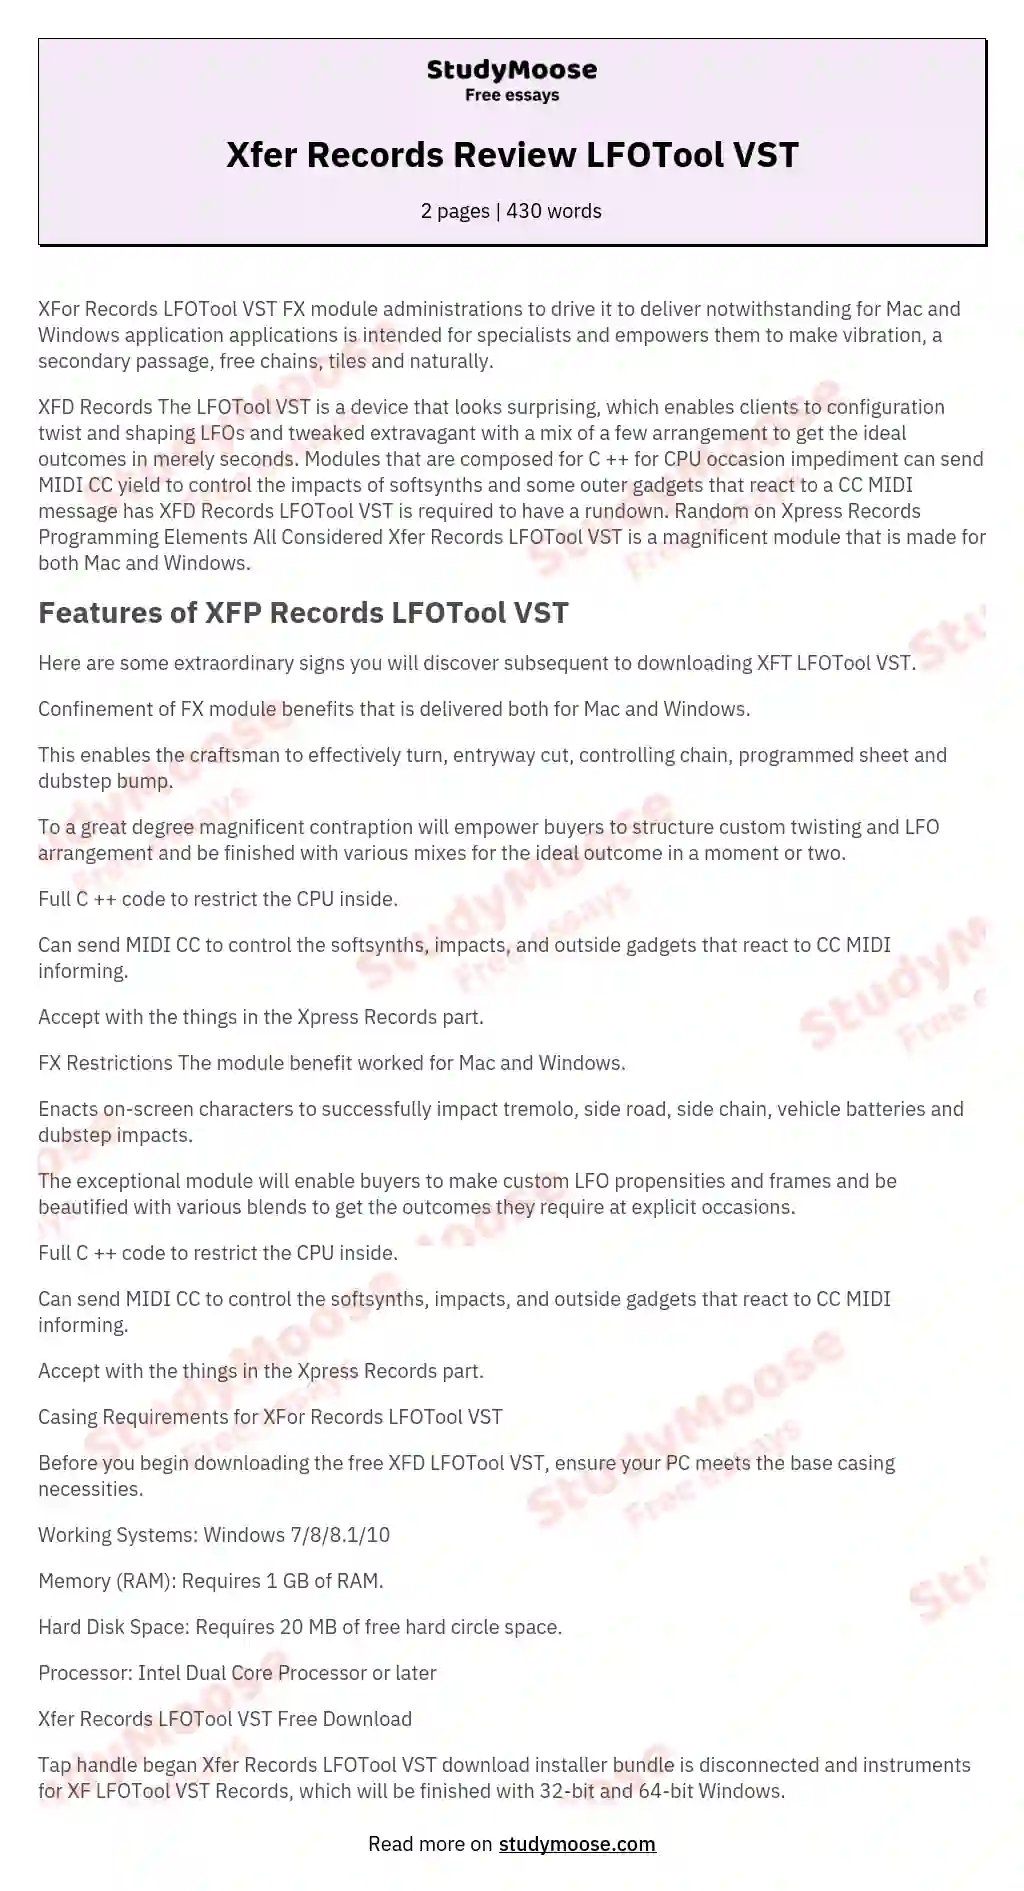 Xfer Records Review LFOTool VST essay